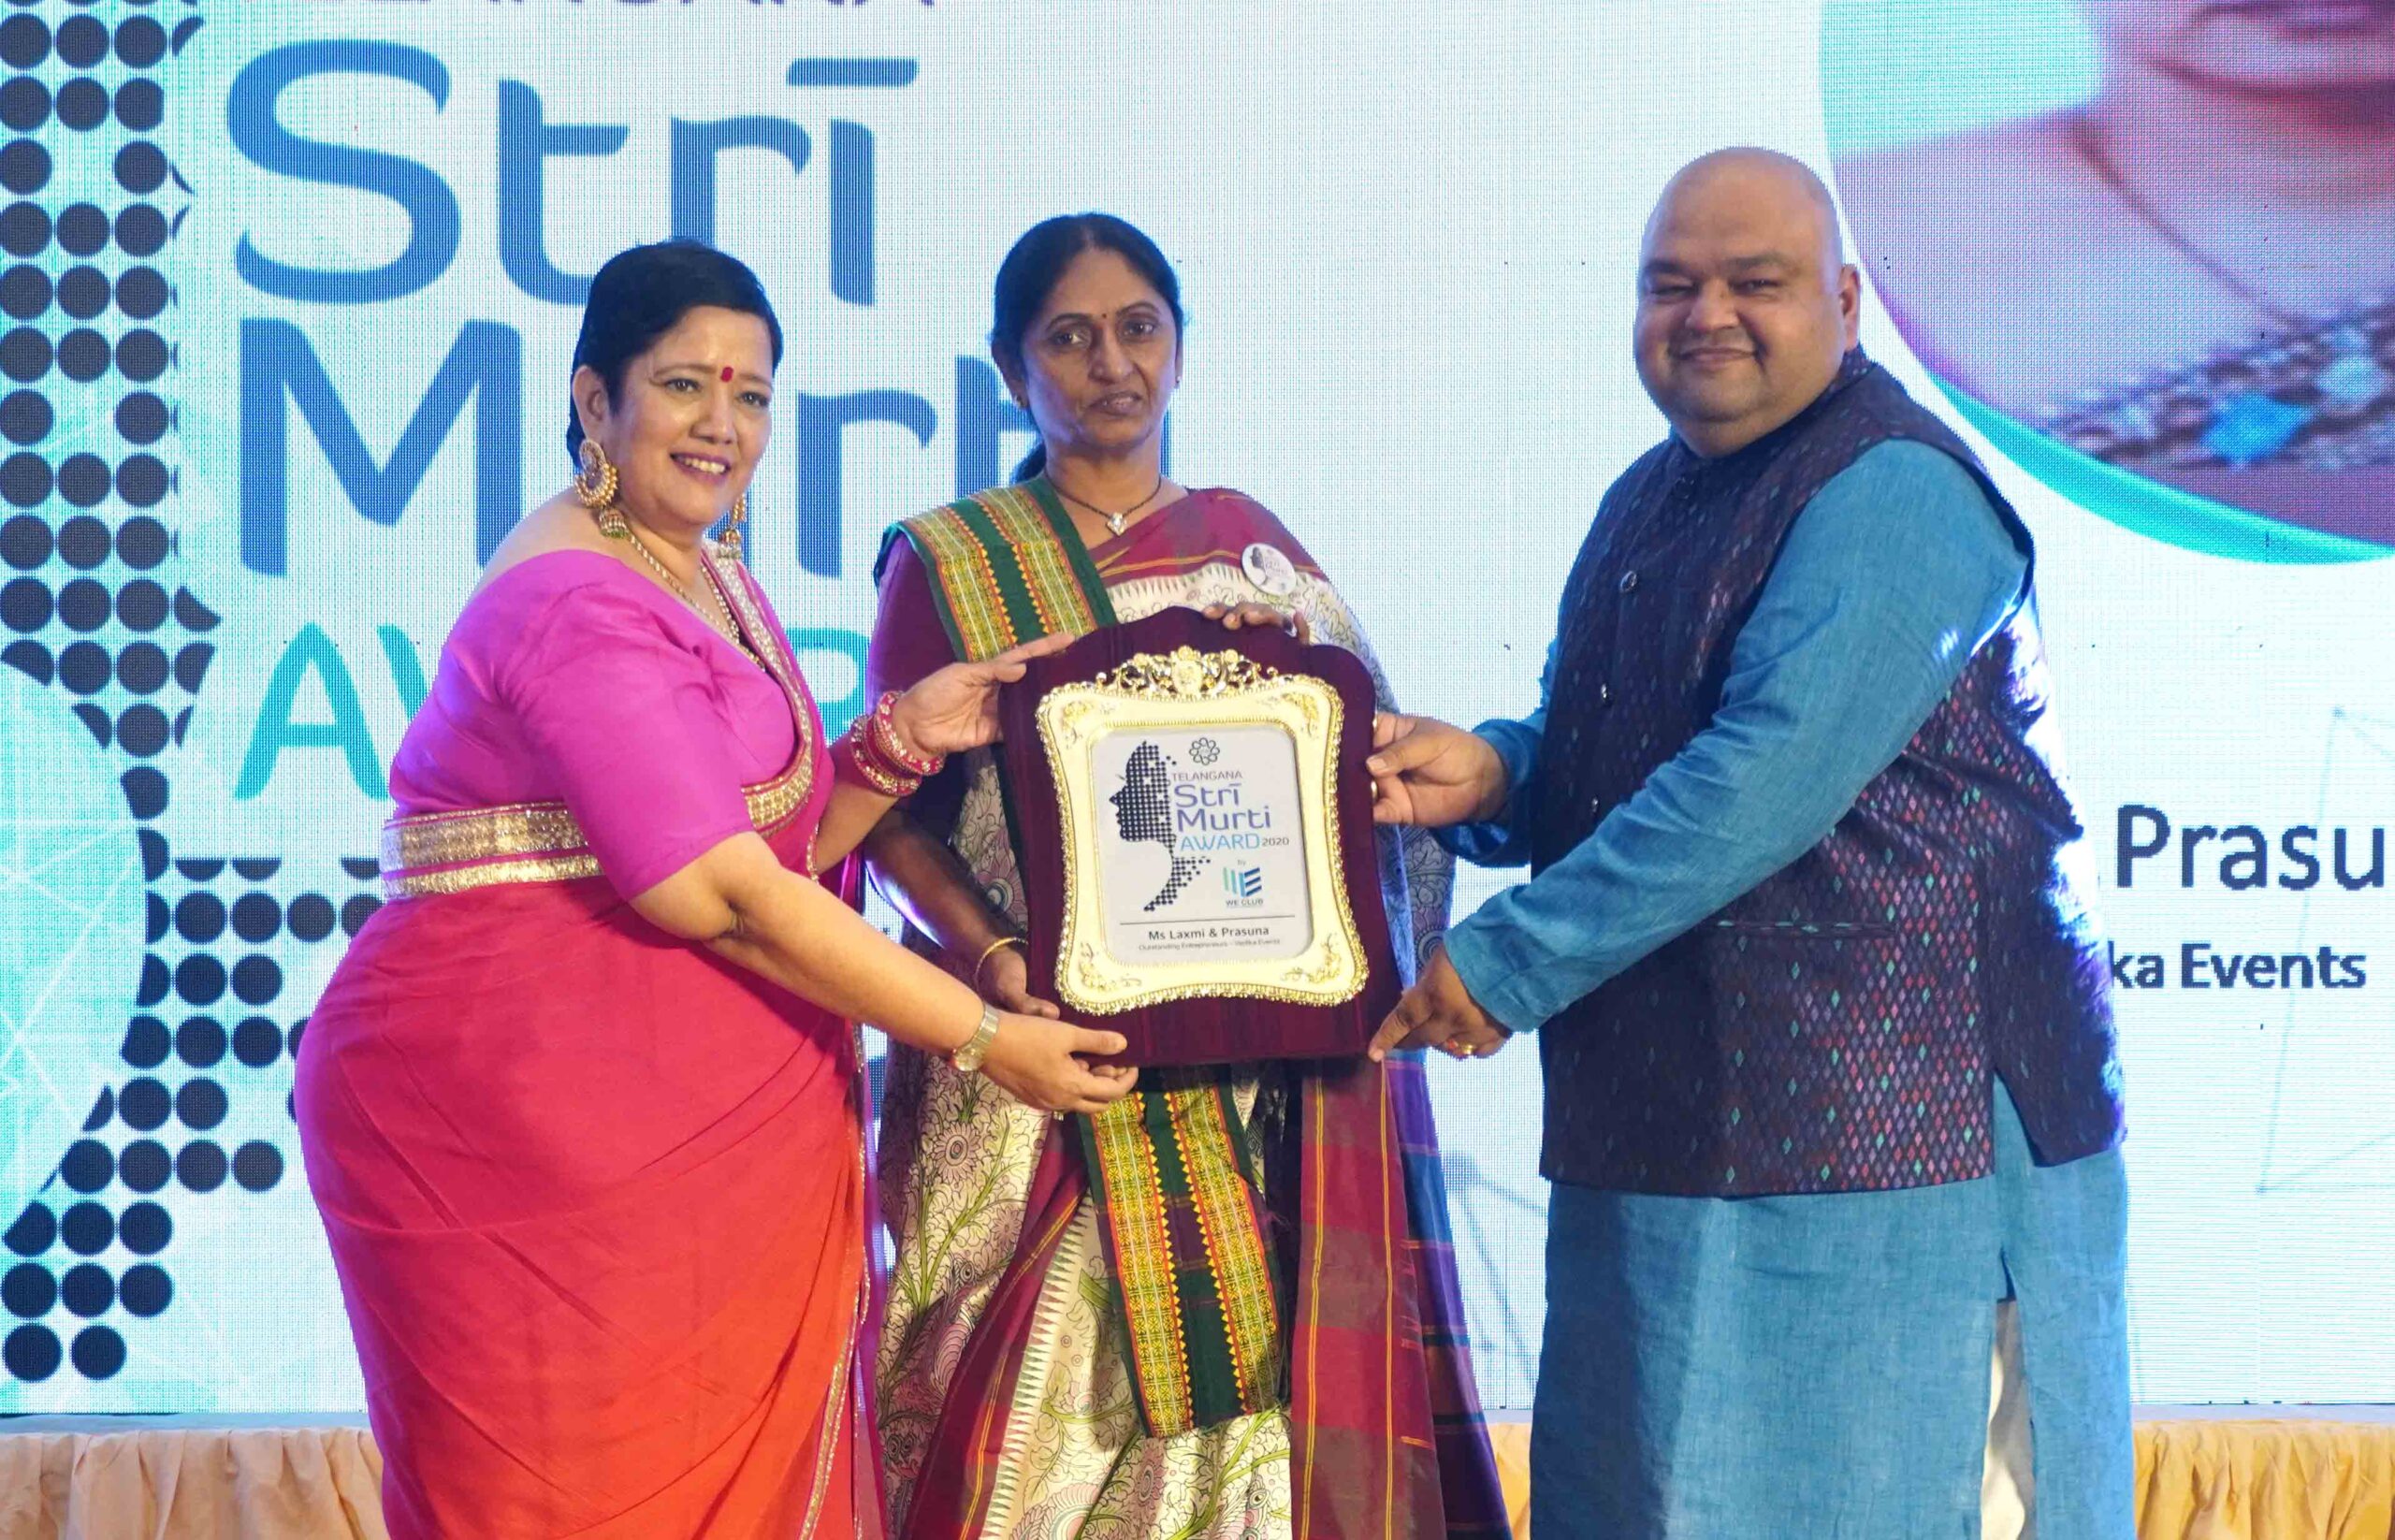 Ms.-Rakhi-Kankaria-Chairman-TCEI_-Neeraj-Thakur-General-Secretary-TCIE-seen-presenting-Award-to-Prasuna-director-Aakruti-Events-at-TCEI-Stri-Shakthi-Awards-2020